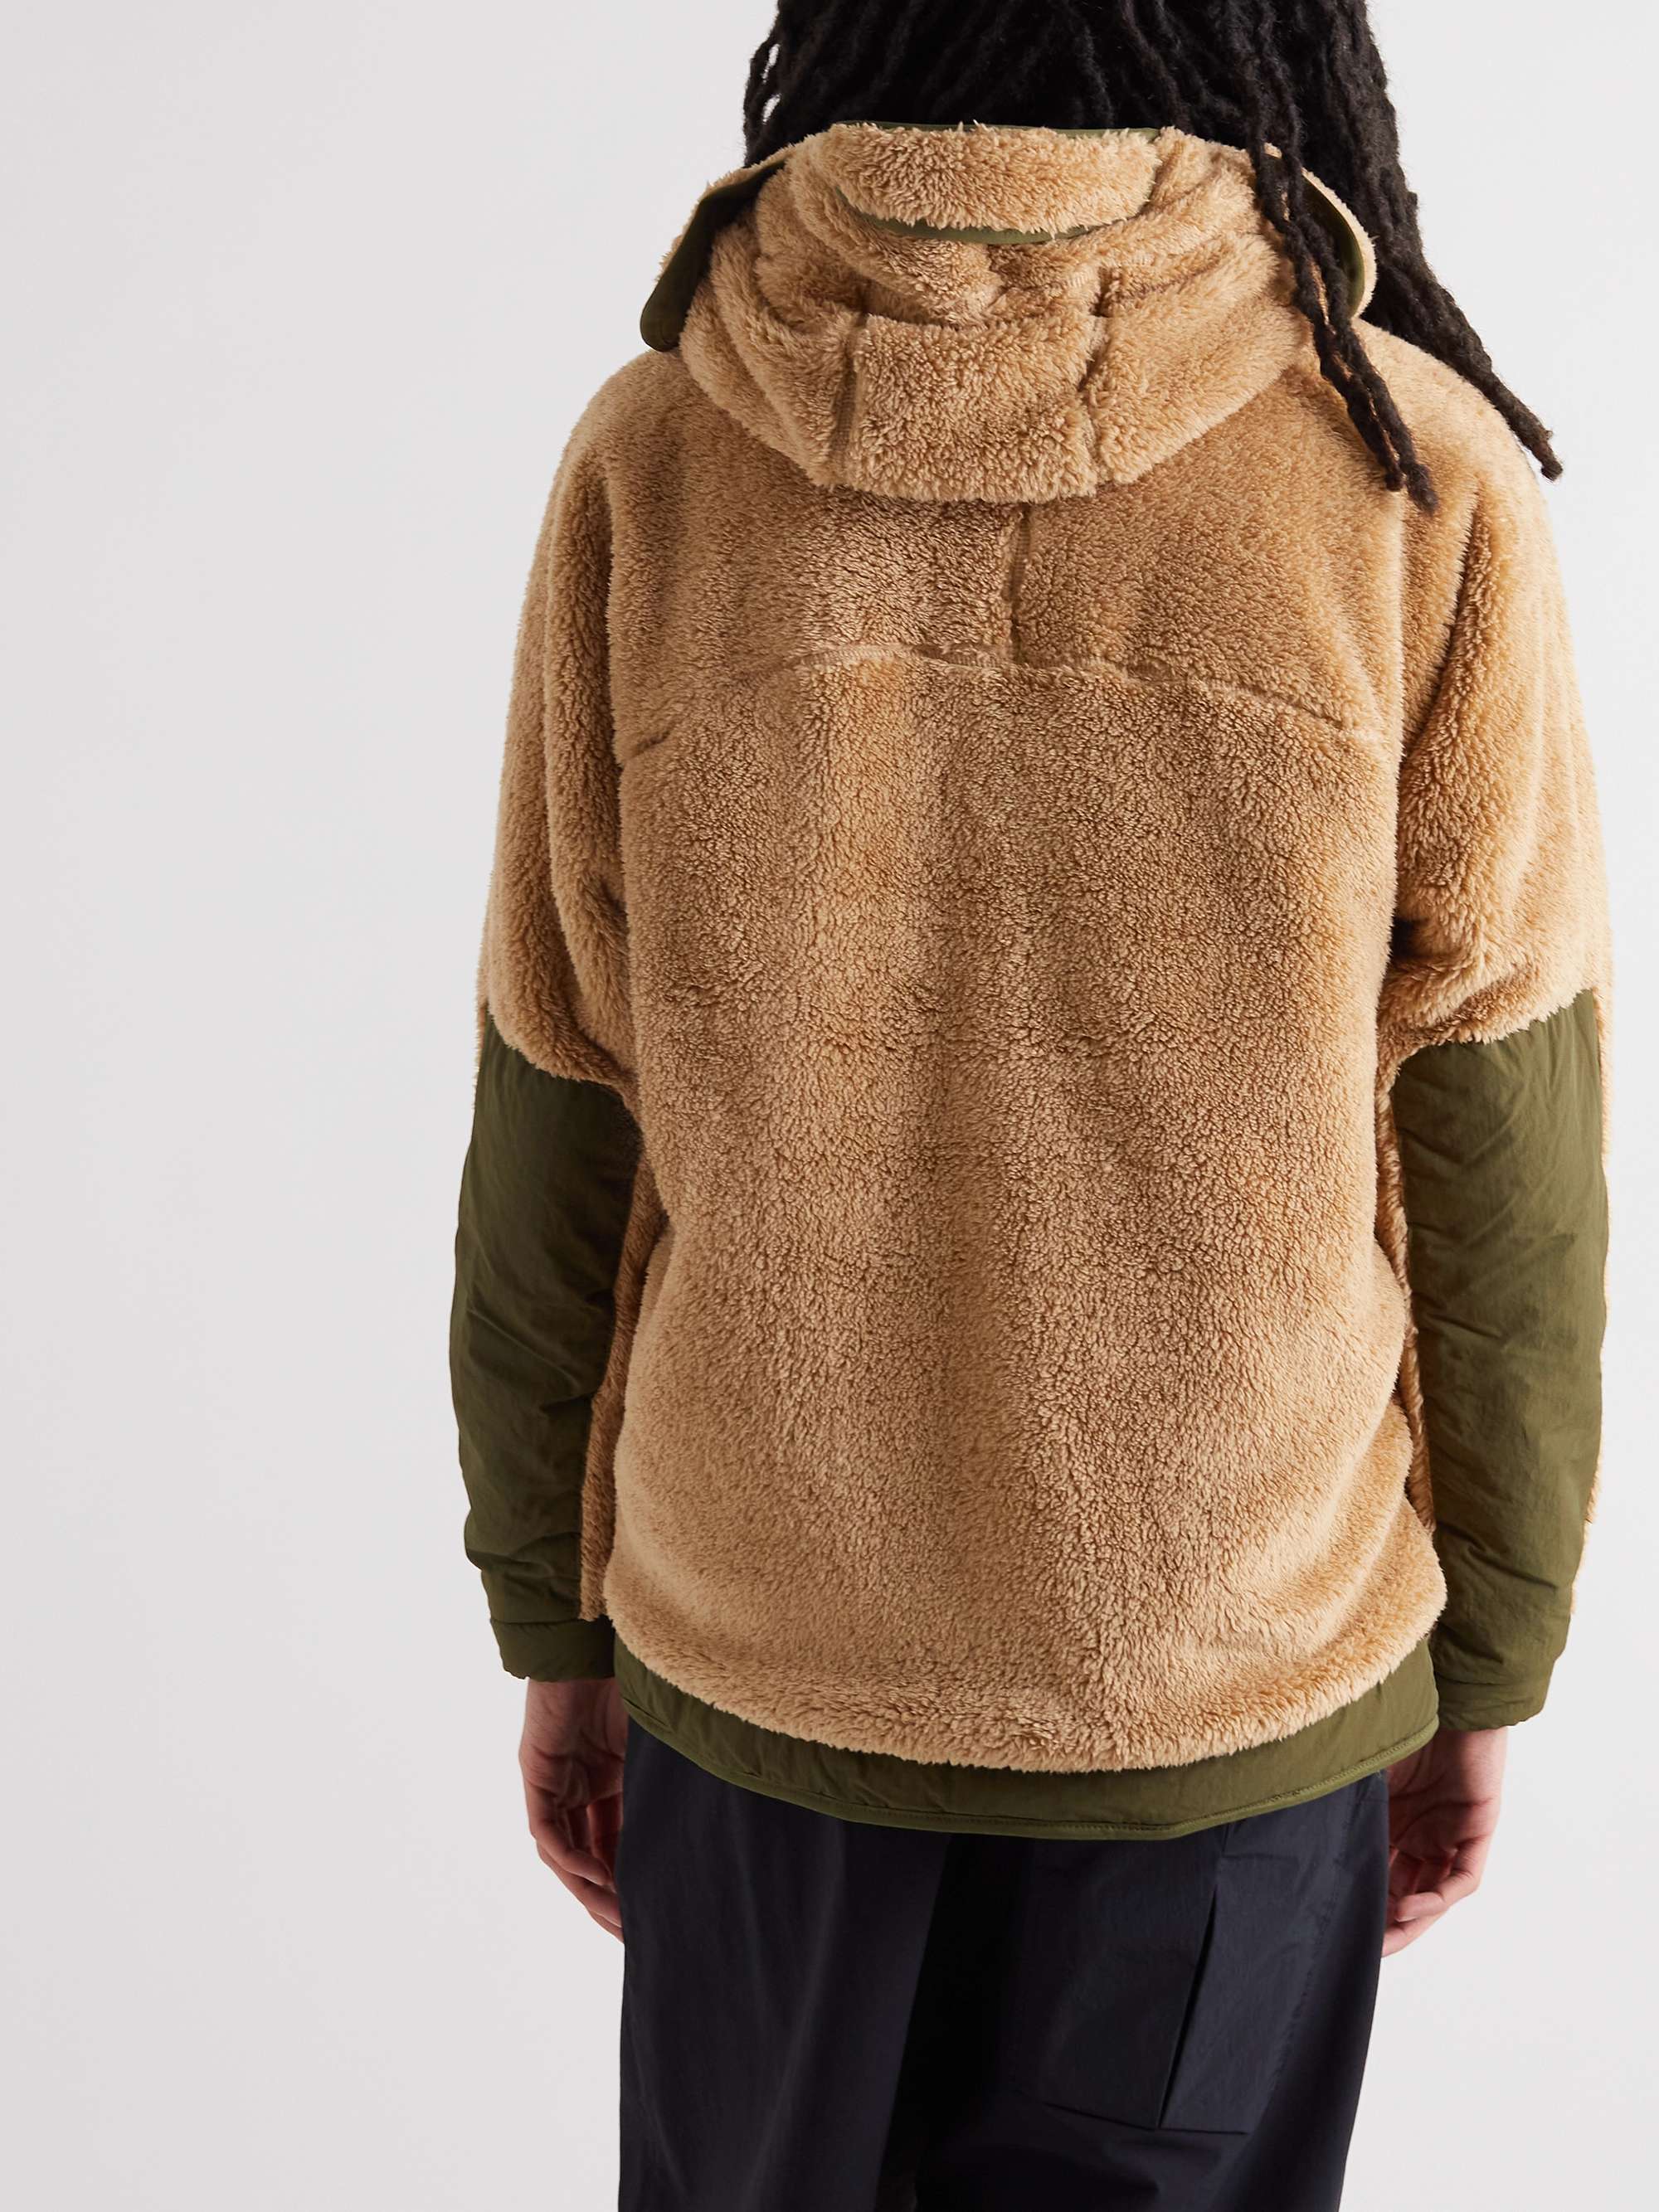 COMFY OUTDOOR GARMENT Shell-Trimmed Hooded Fleece Jacket